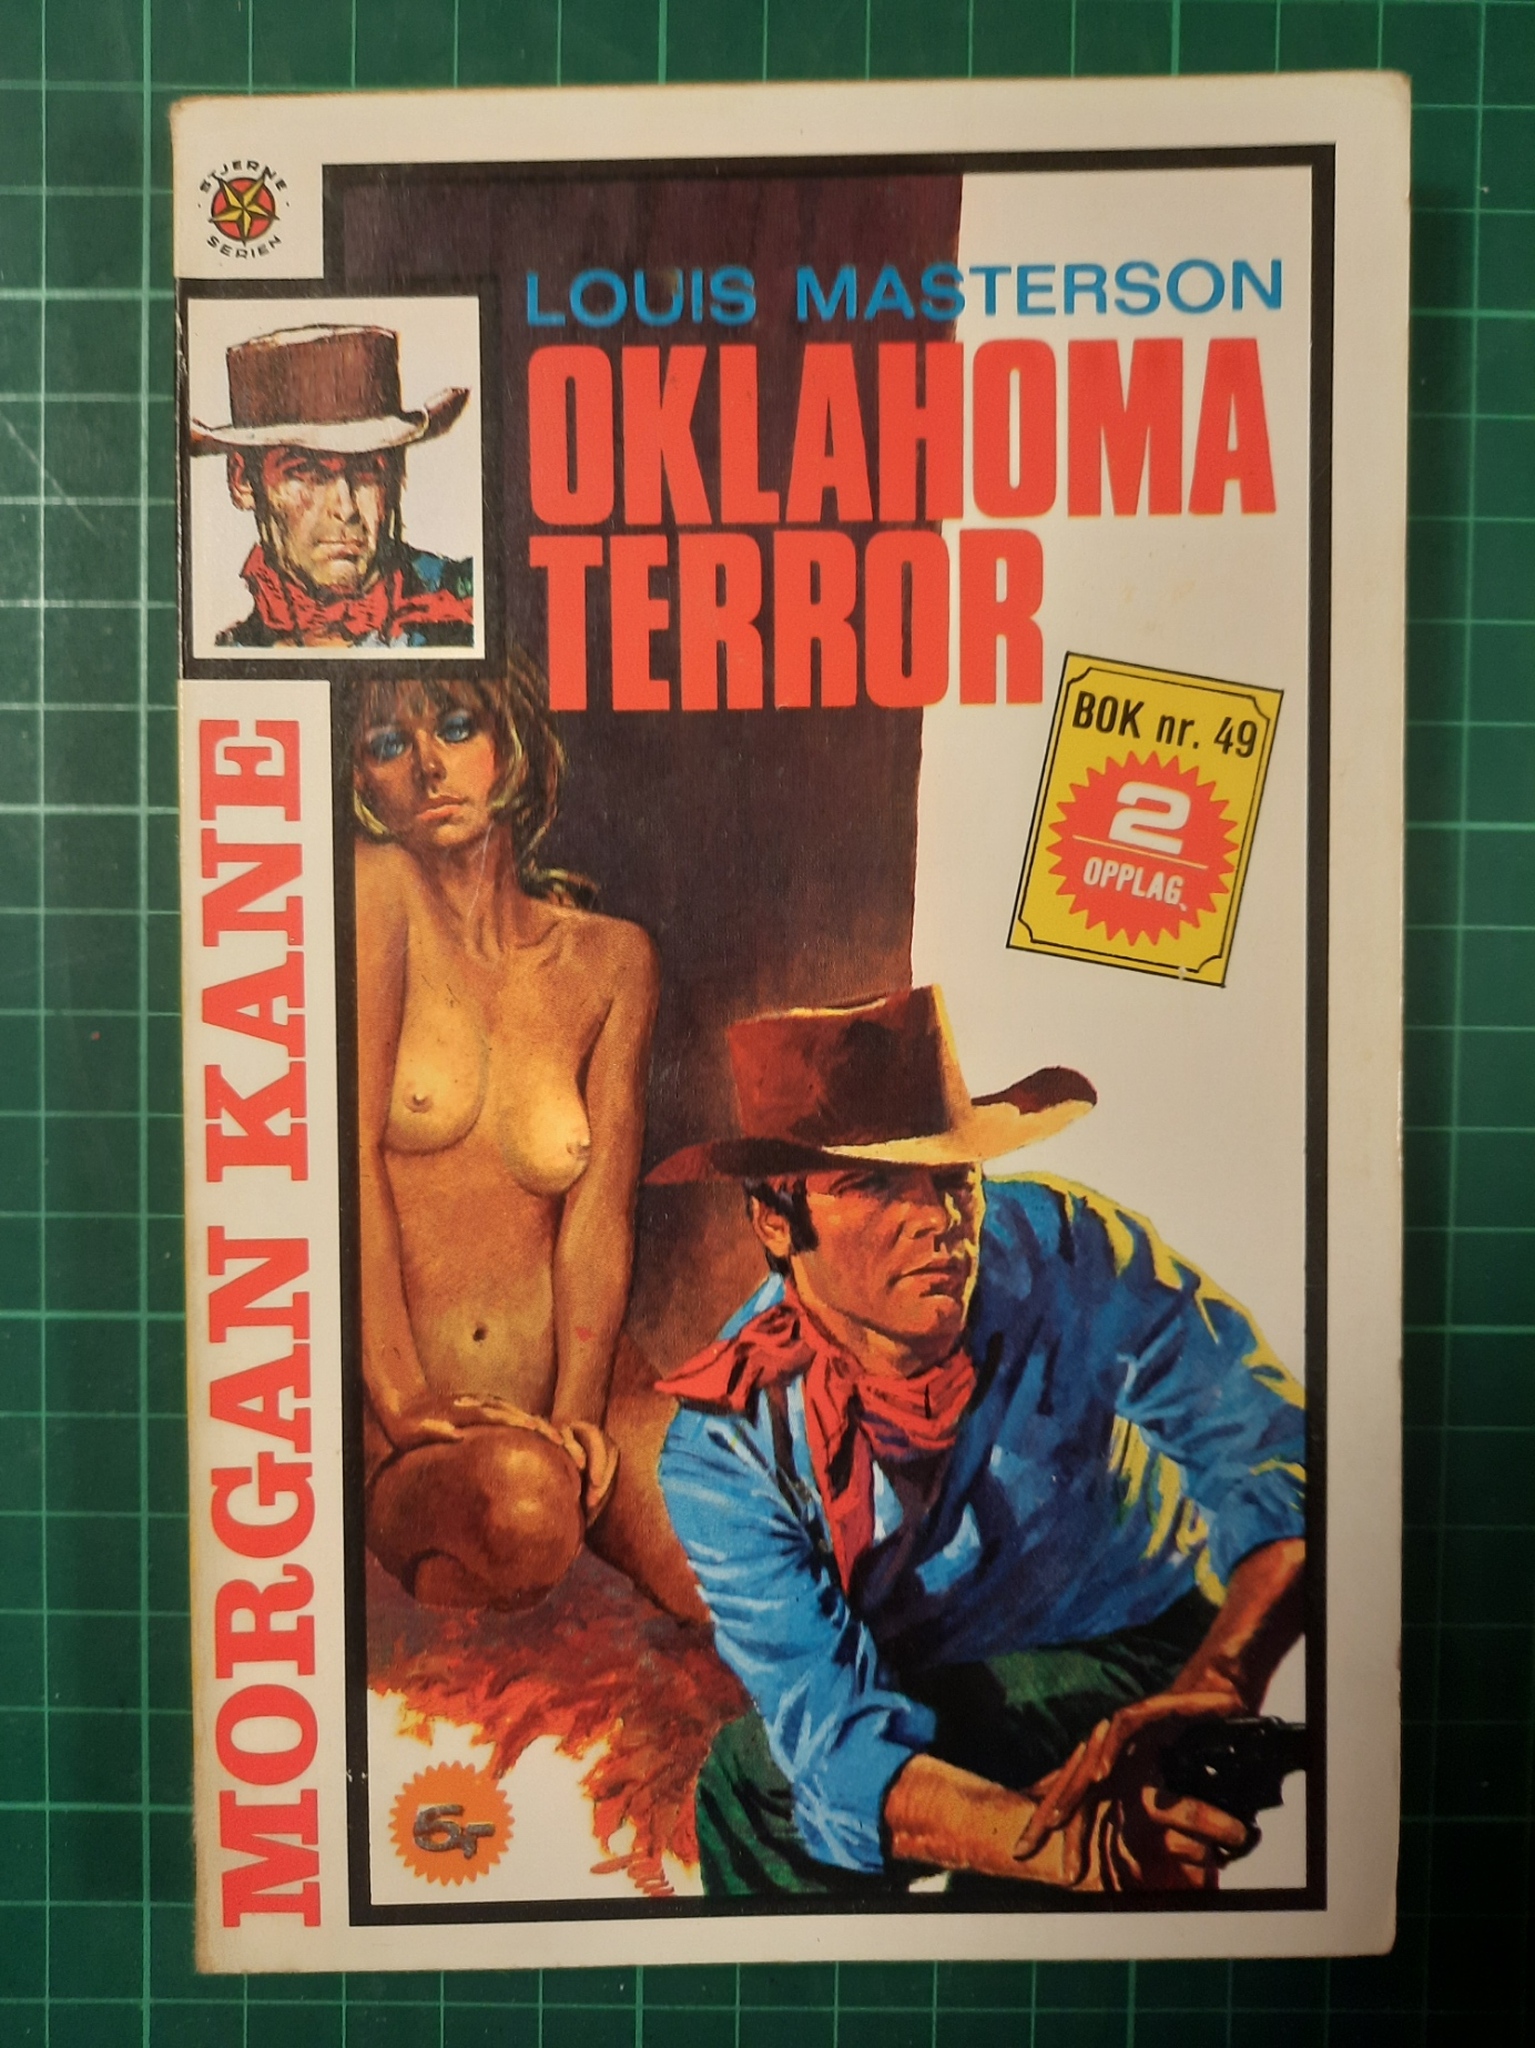 Morgan Kane pocket 49 Oklahoma terror